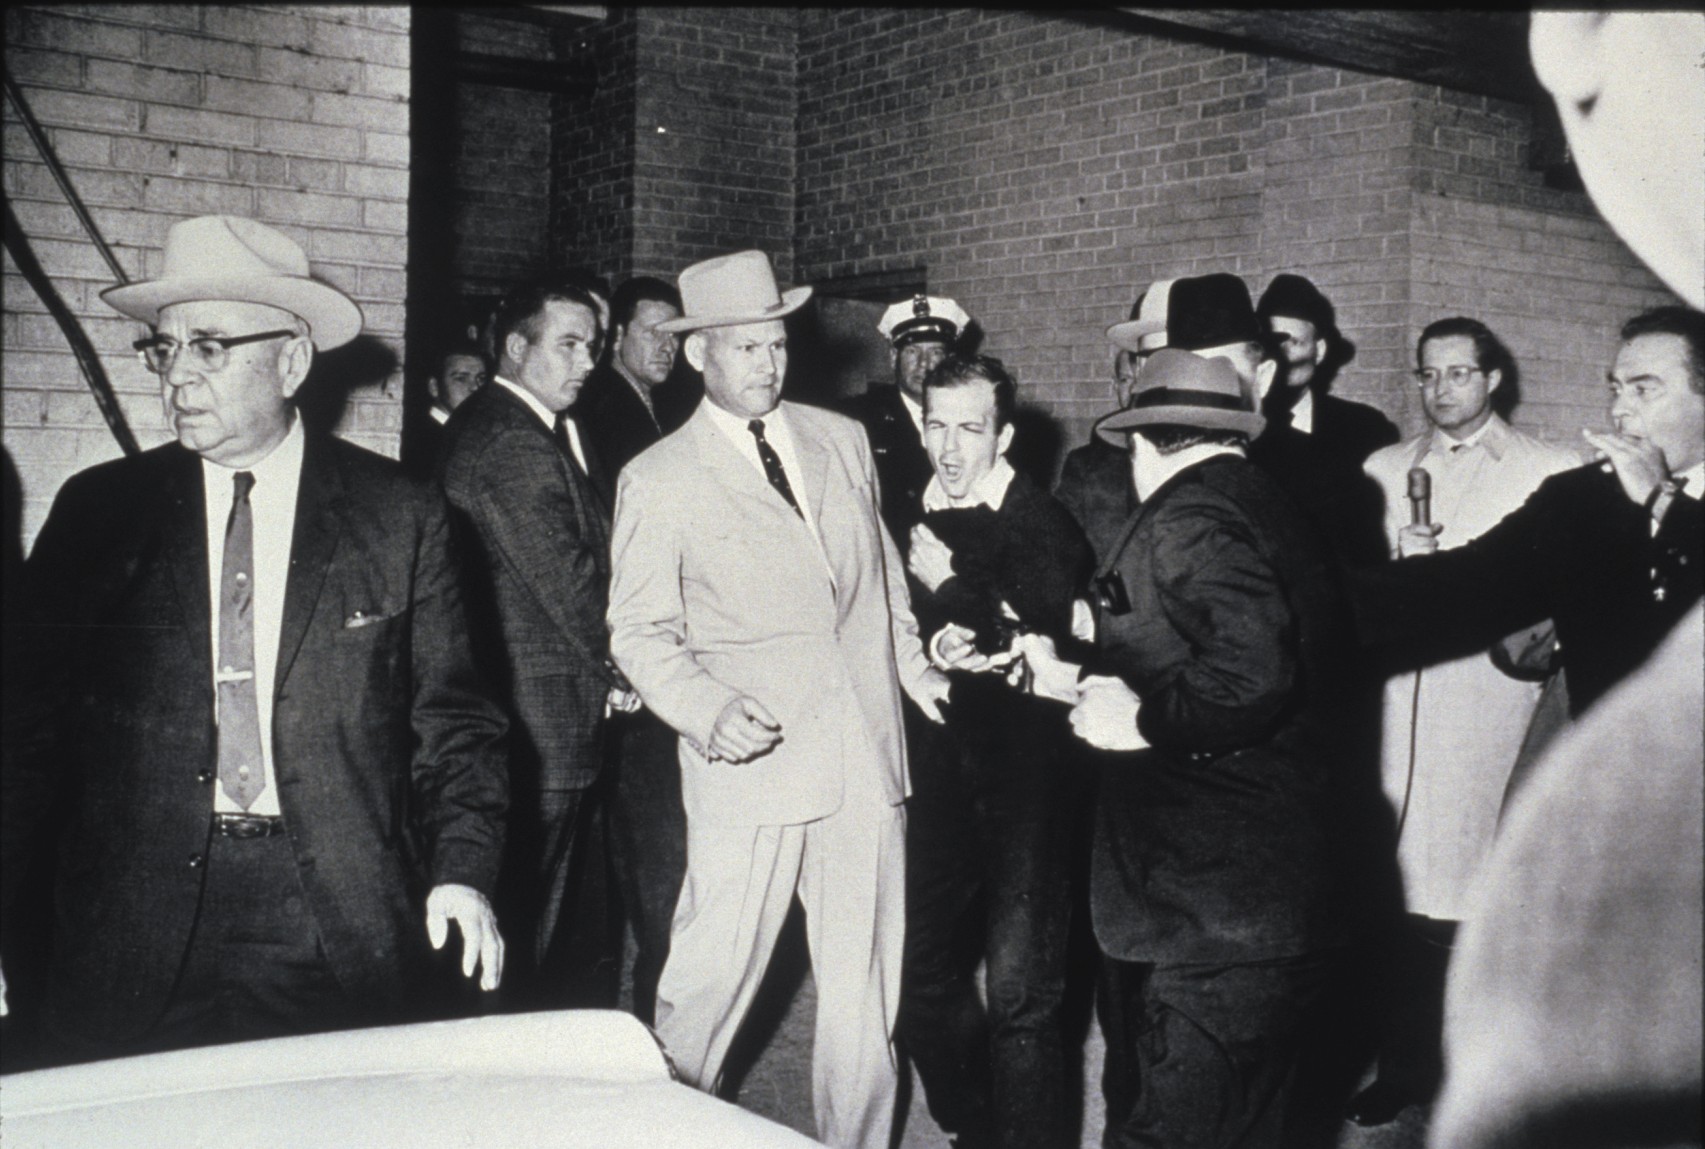 Jack Ruby shoots Lee Harvey Oswald, by Bob Jackson, 1963